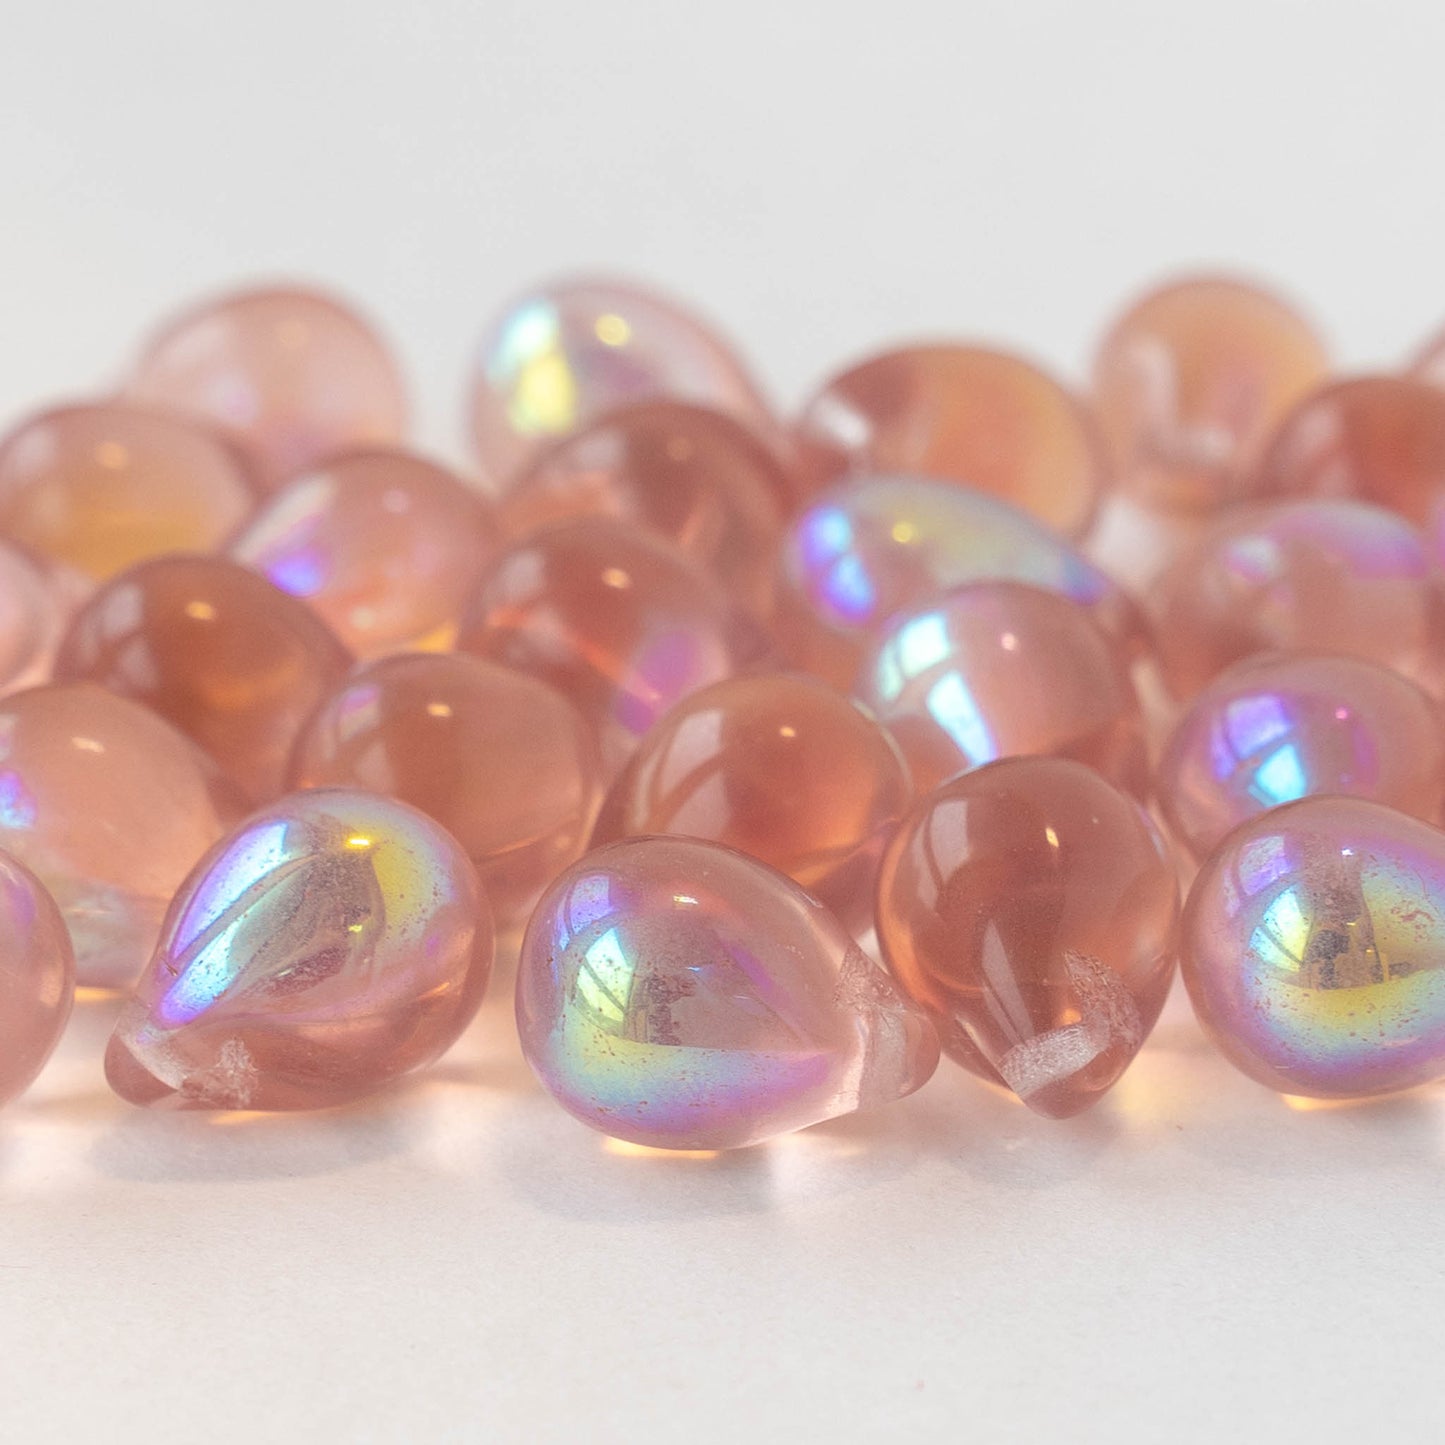 10x14mm Glass Teardrop Beads - Rosaline AB - 12 beads